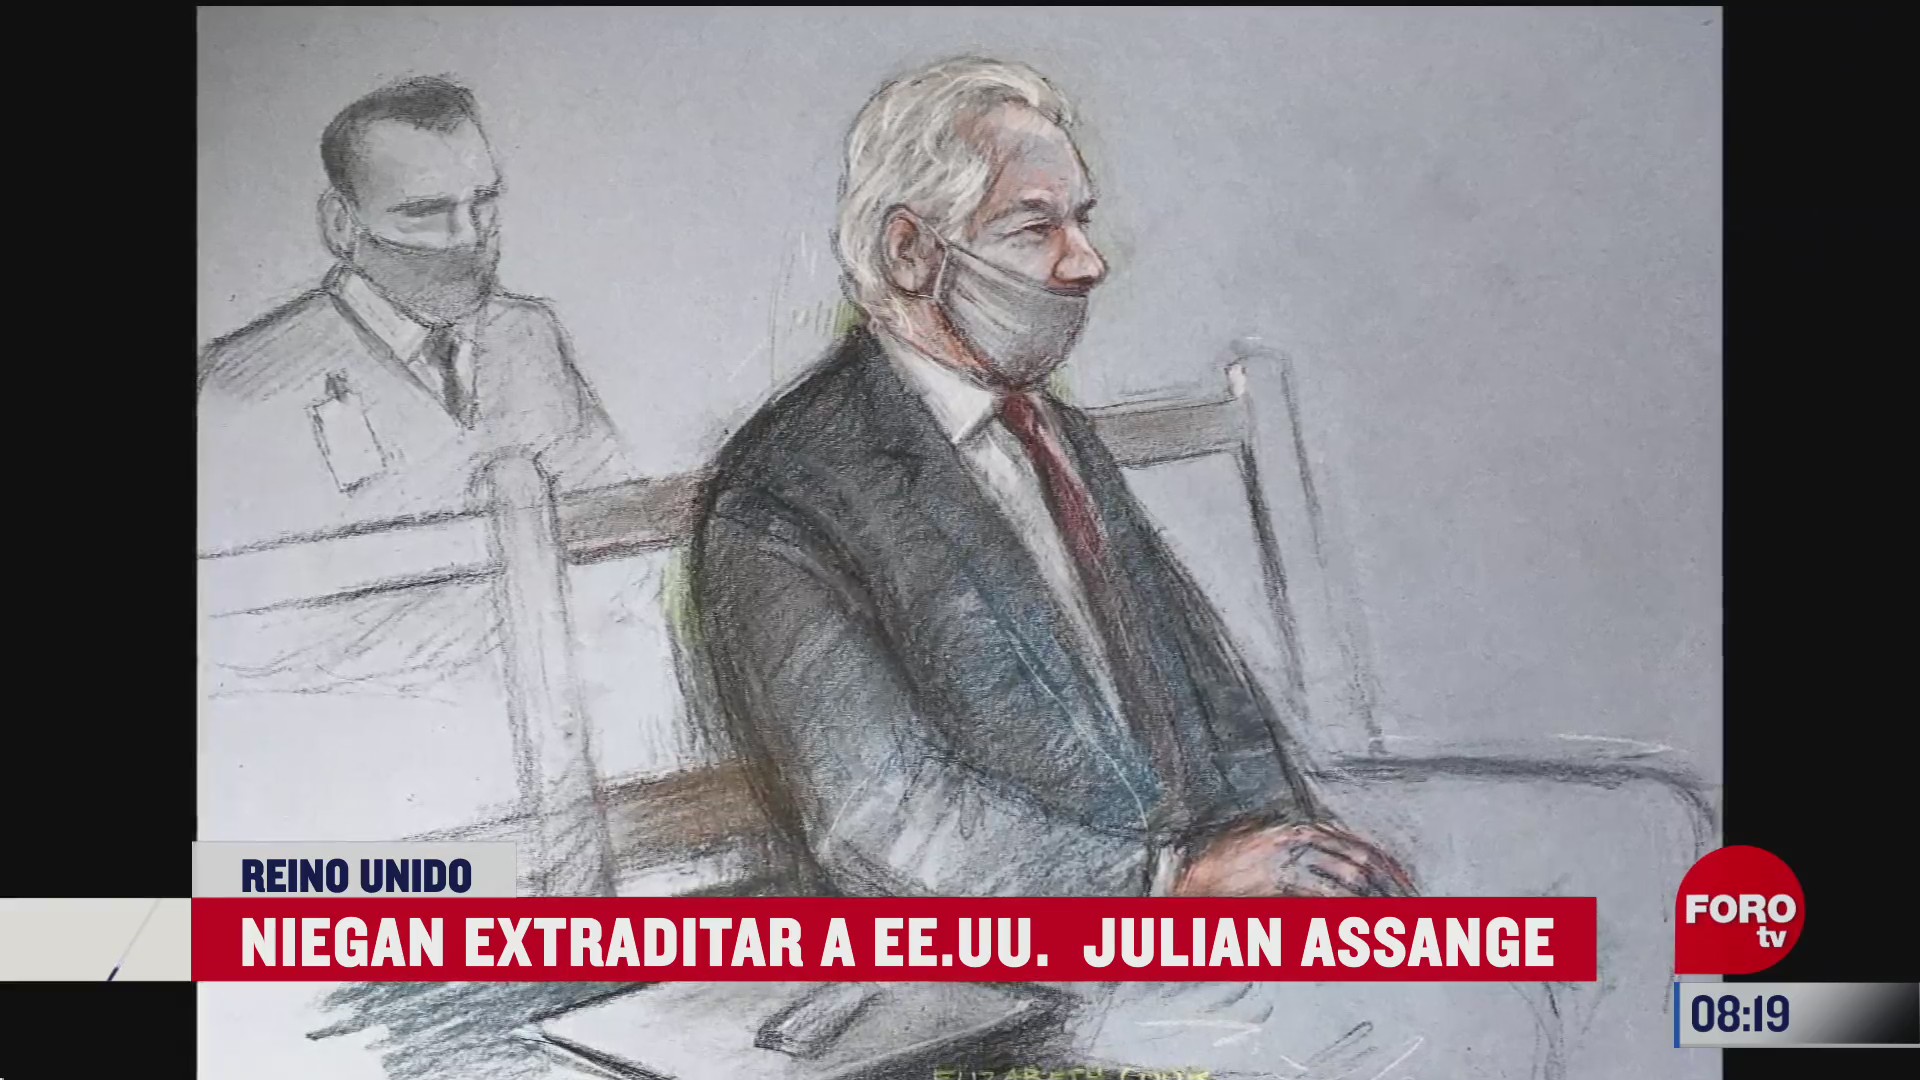 tribunal britanico niega extraditar a julian assange a ee uu